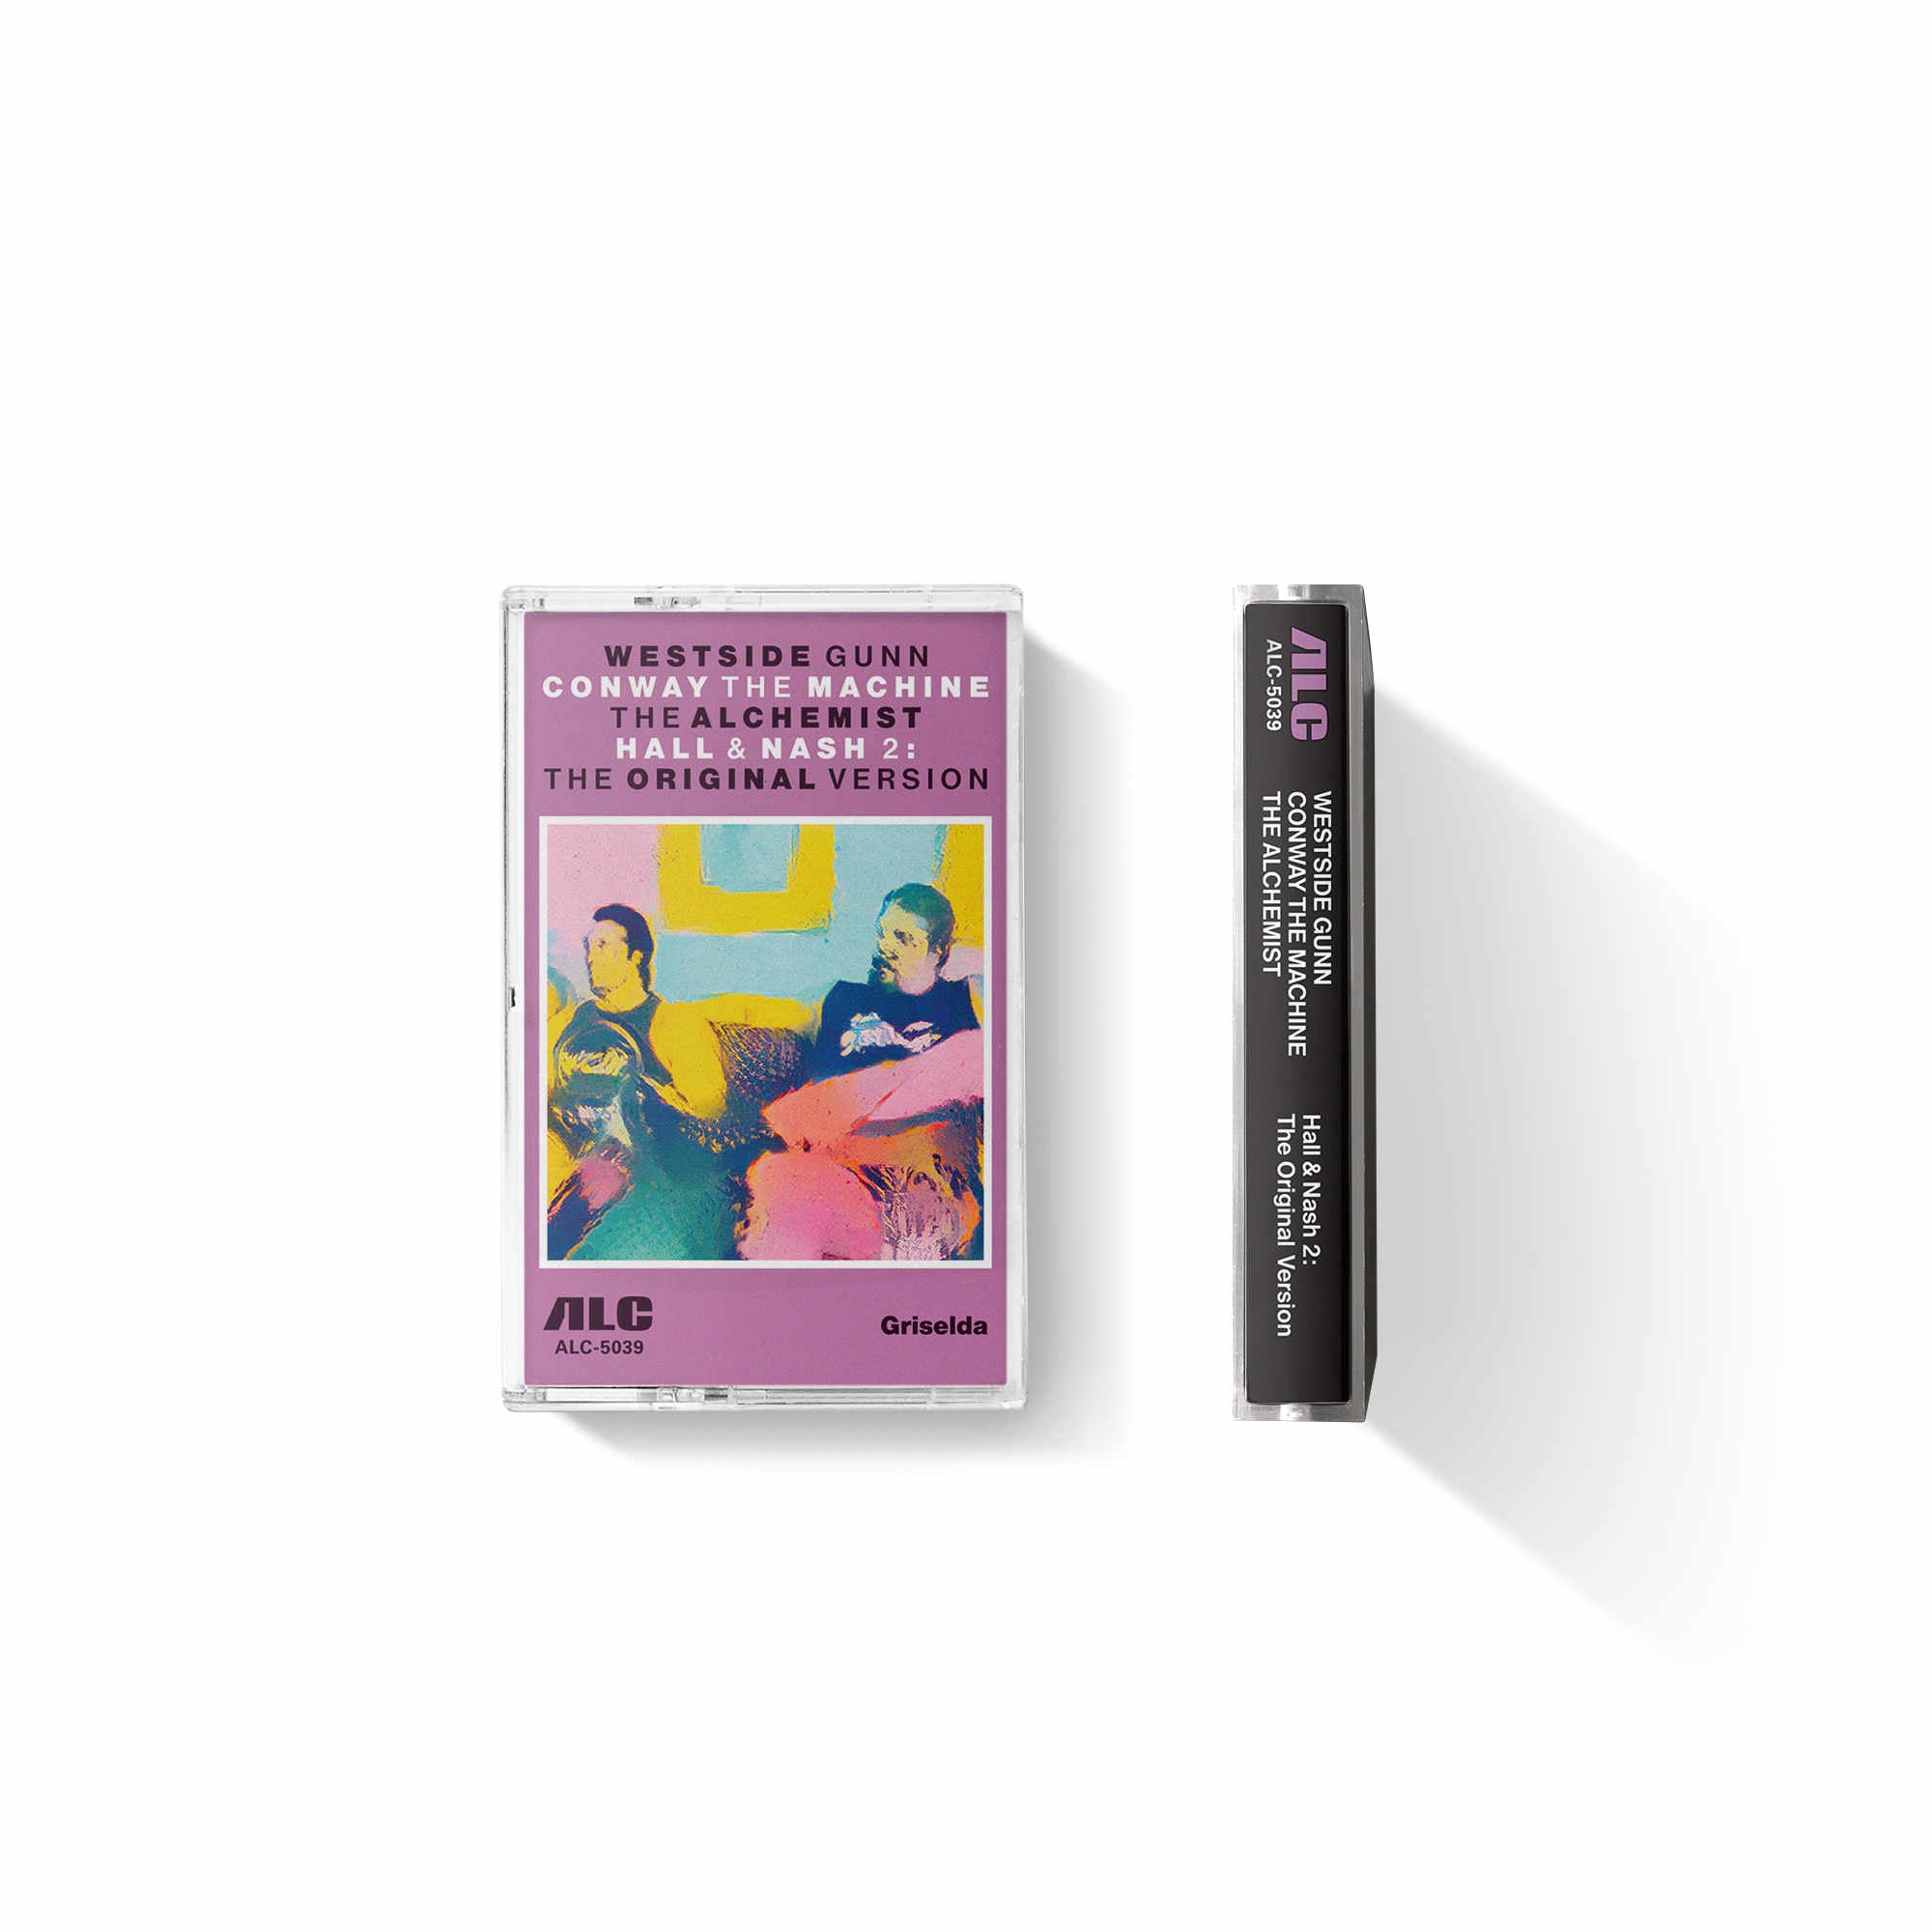 Hall & Nash 2: The Original Version (Cassette)